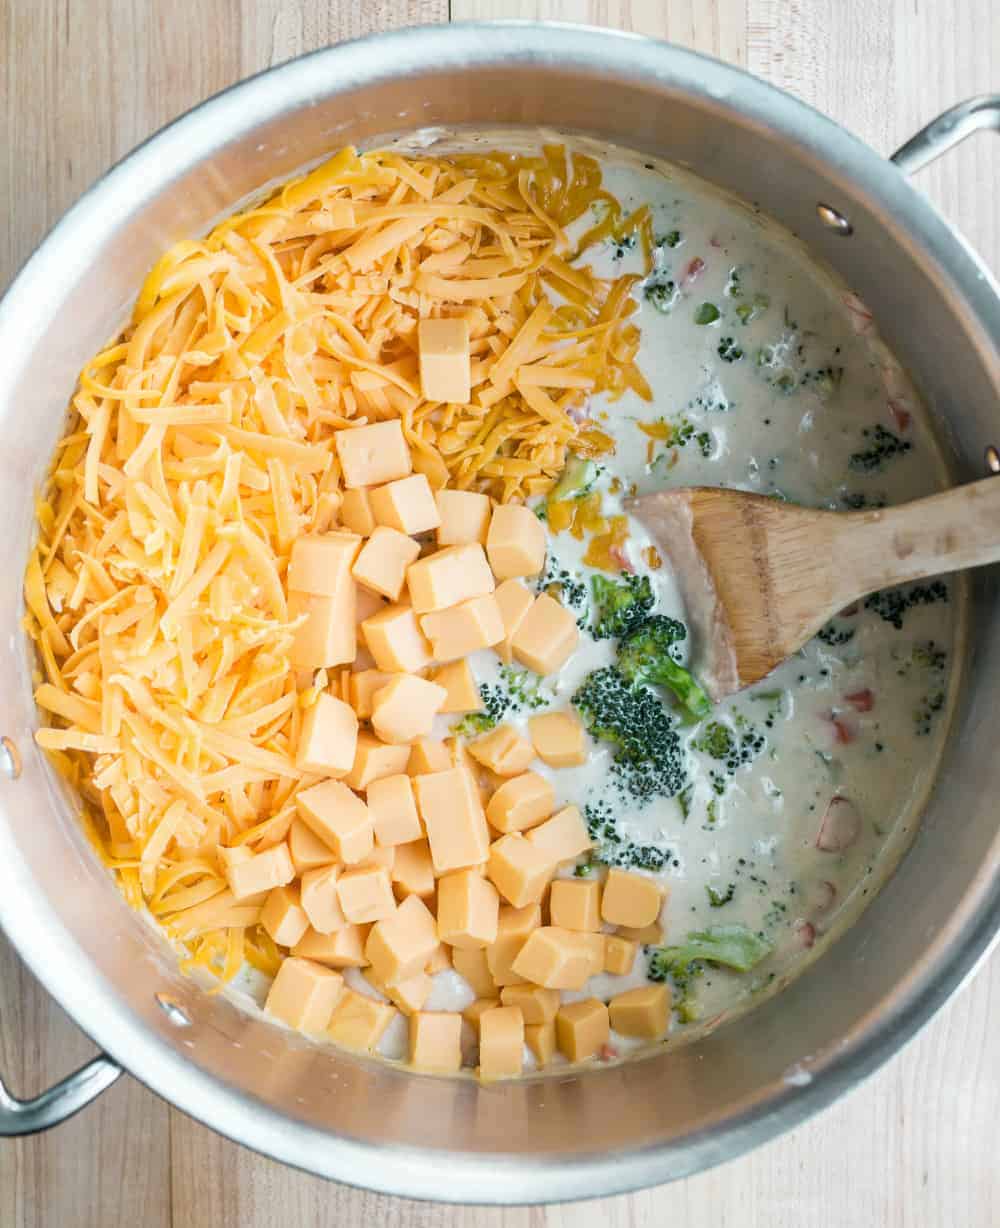 Löffel rühren den Käse in einen Topf mit Brokkoli-Käse-Suppe